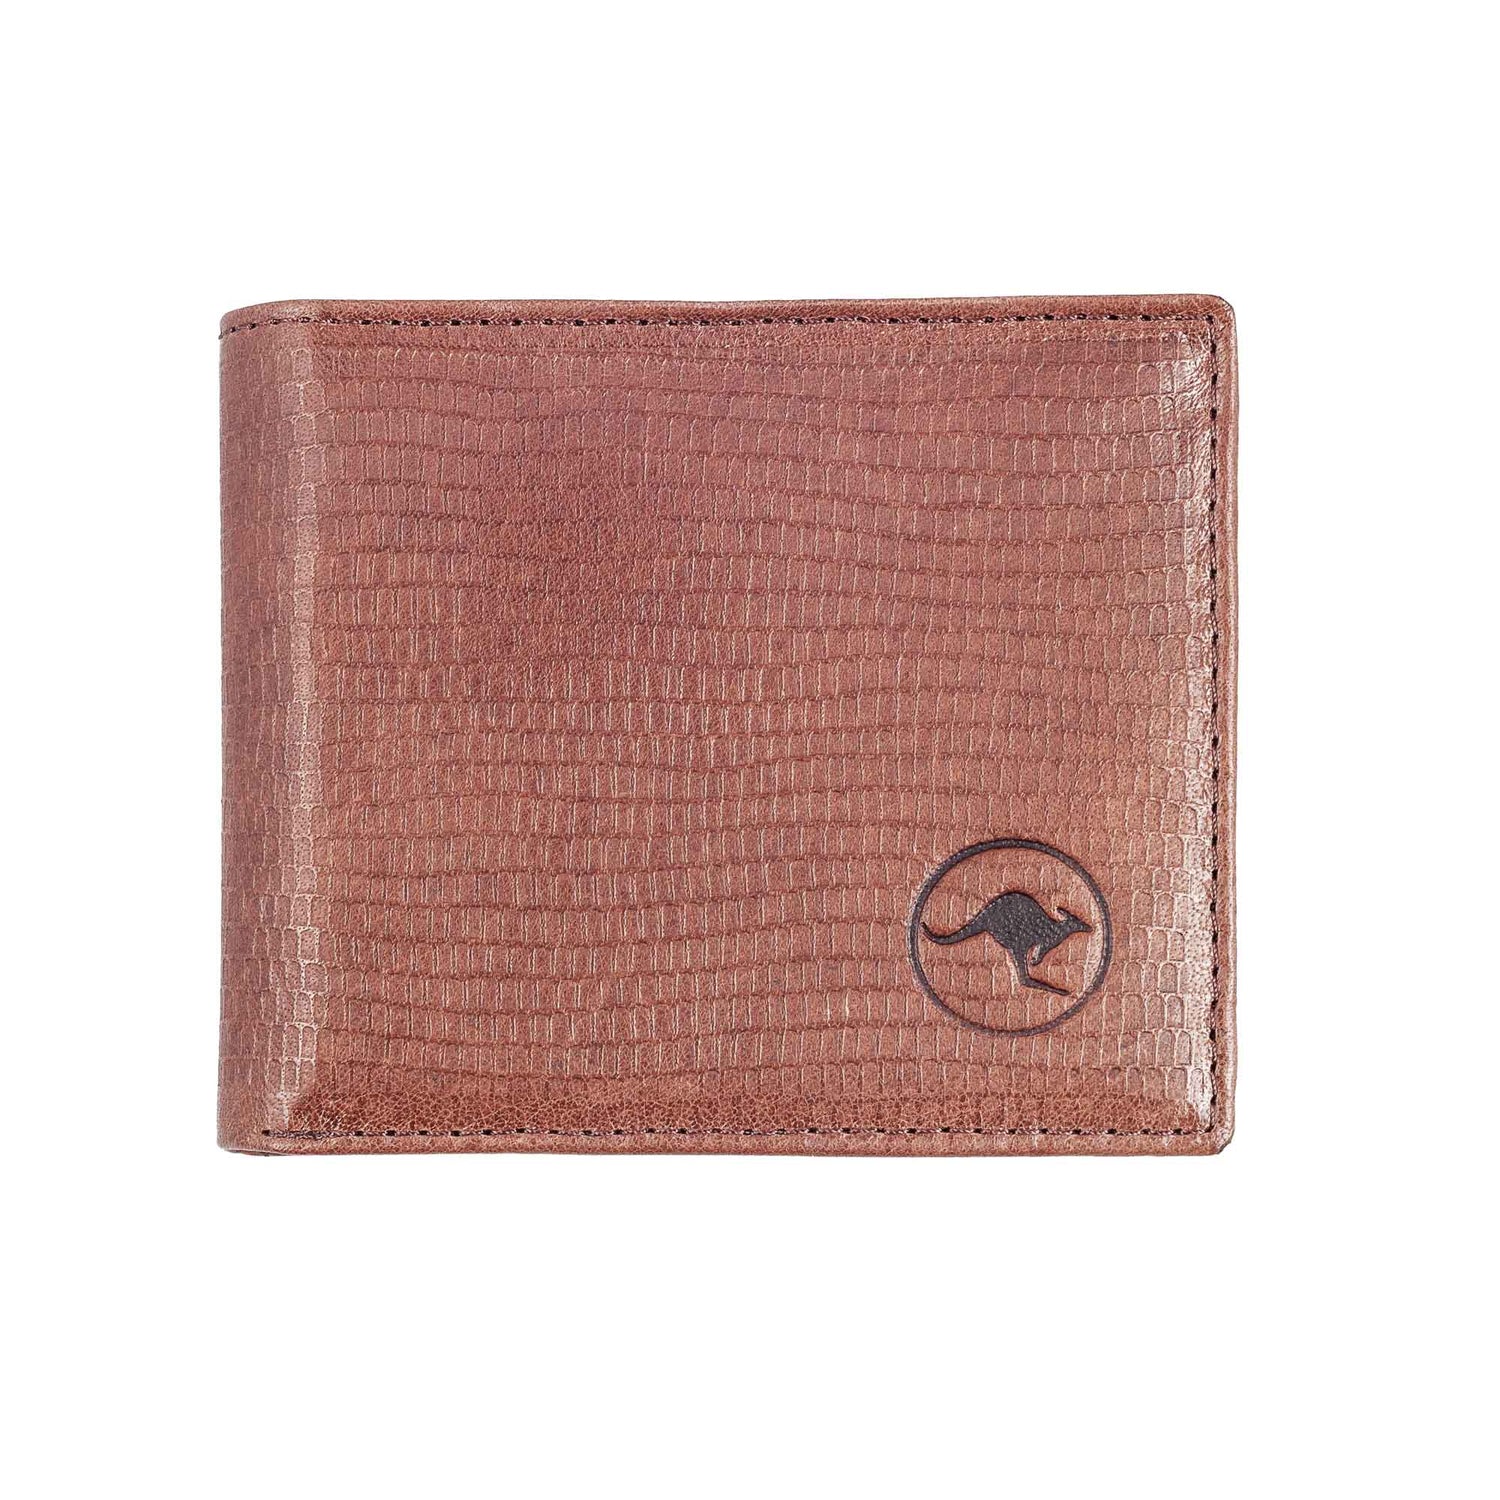 Kangaroo RFID Wallet Lizard Print Leather Emboss 